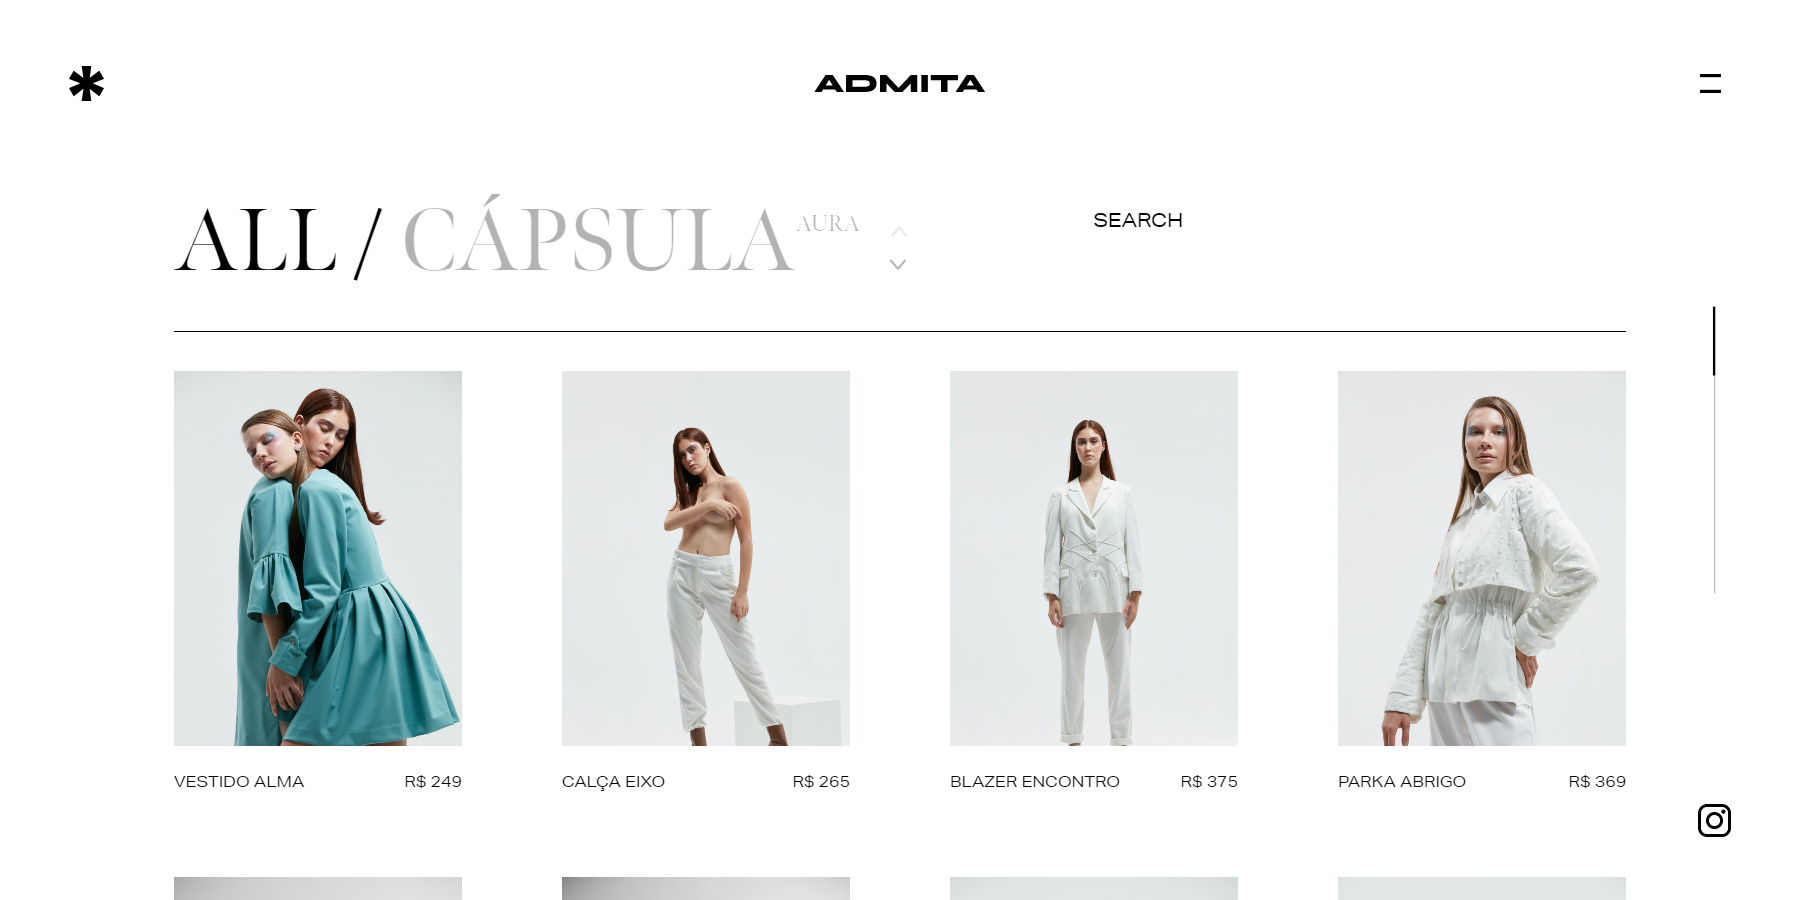 Admita - Website of the Day